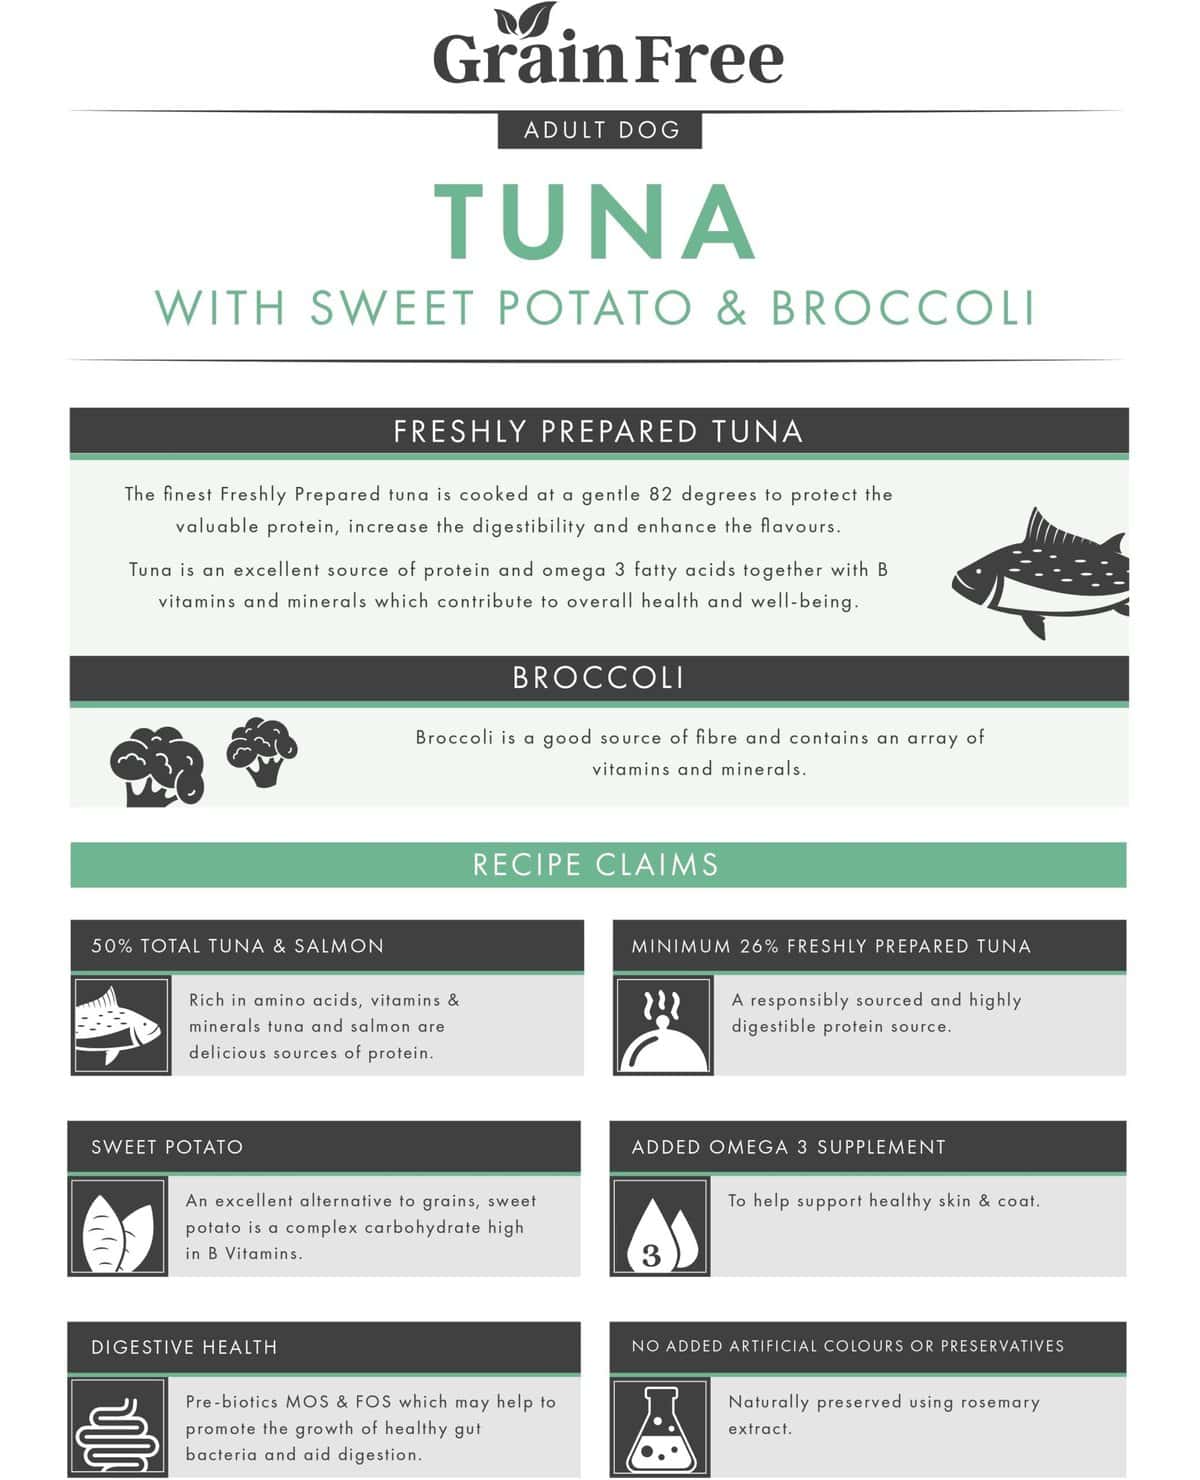 Grain Free Adult Dog 50% Tuna with Salmon, Sweet Potato & Broccoli Complete Dry Food